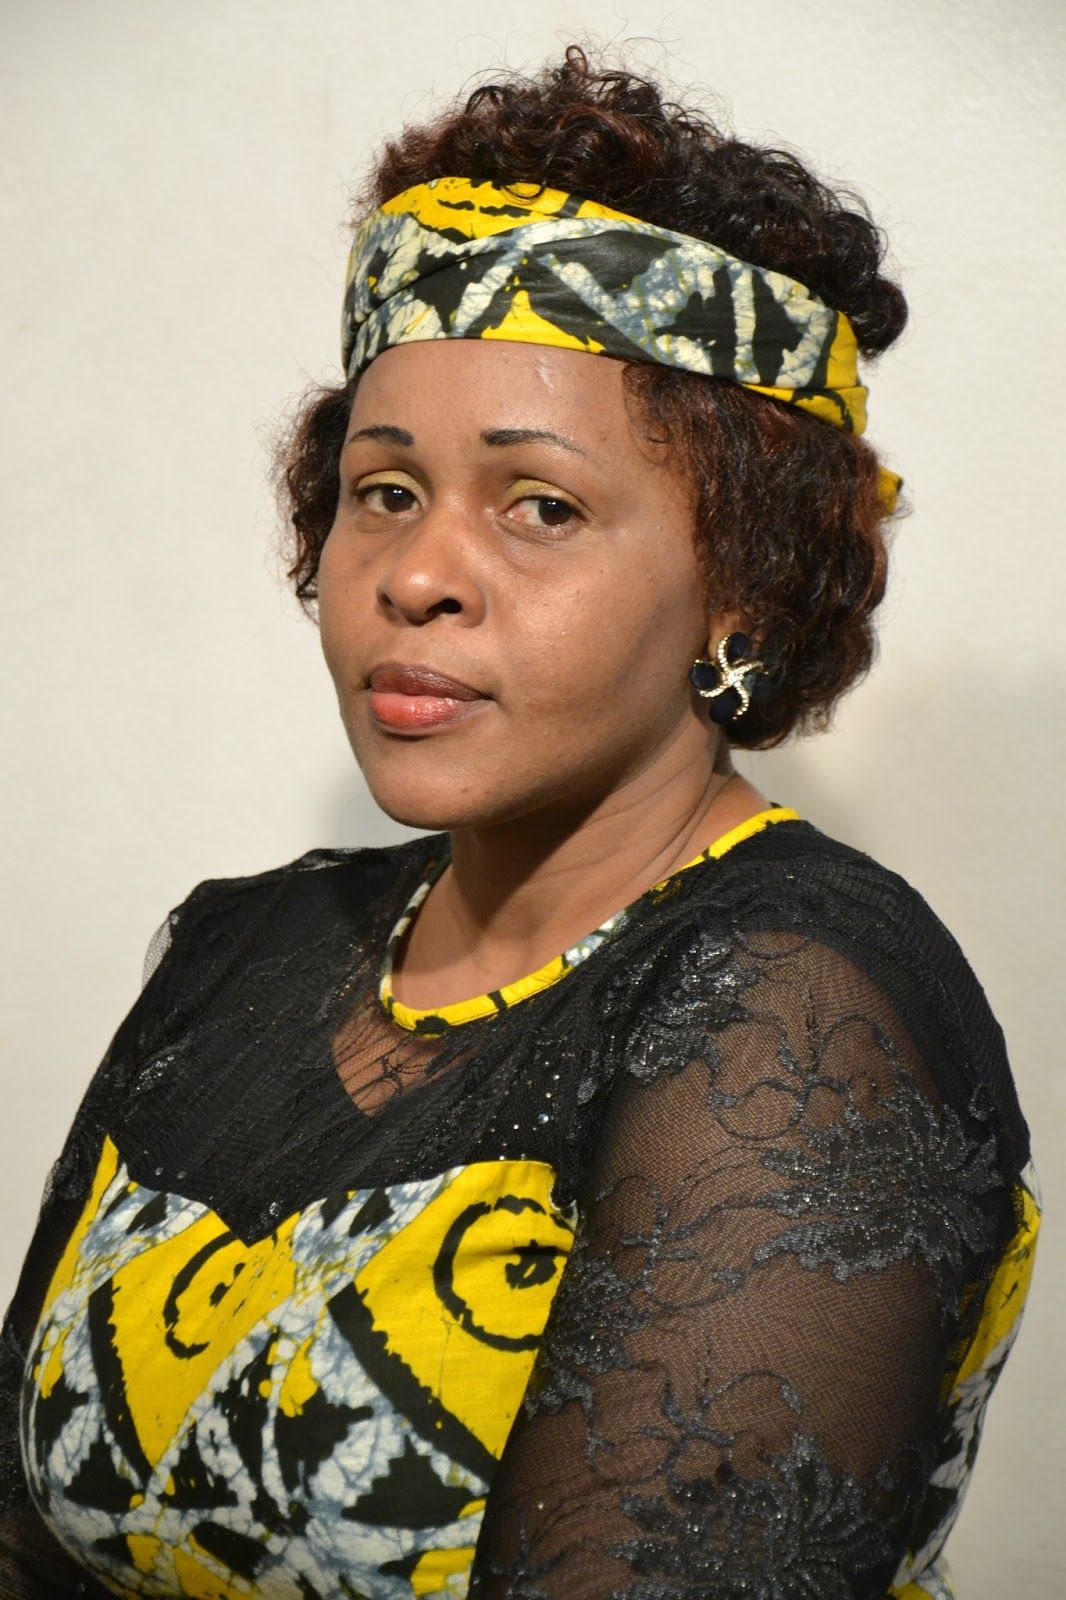 Jennifer Mgendi - Nimeanza Nawe